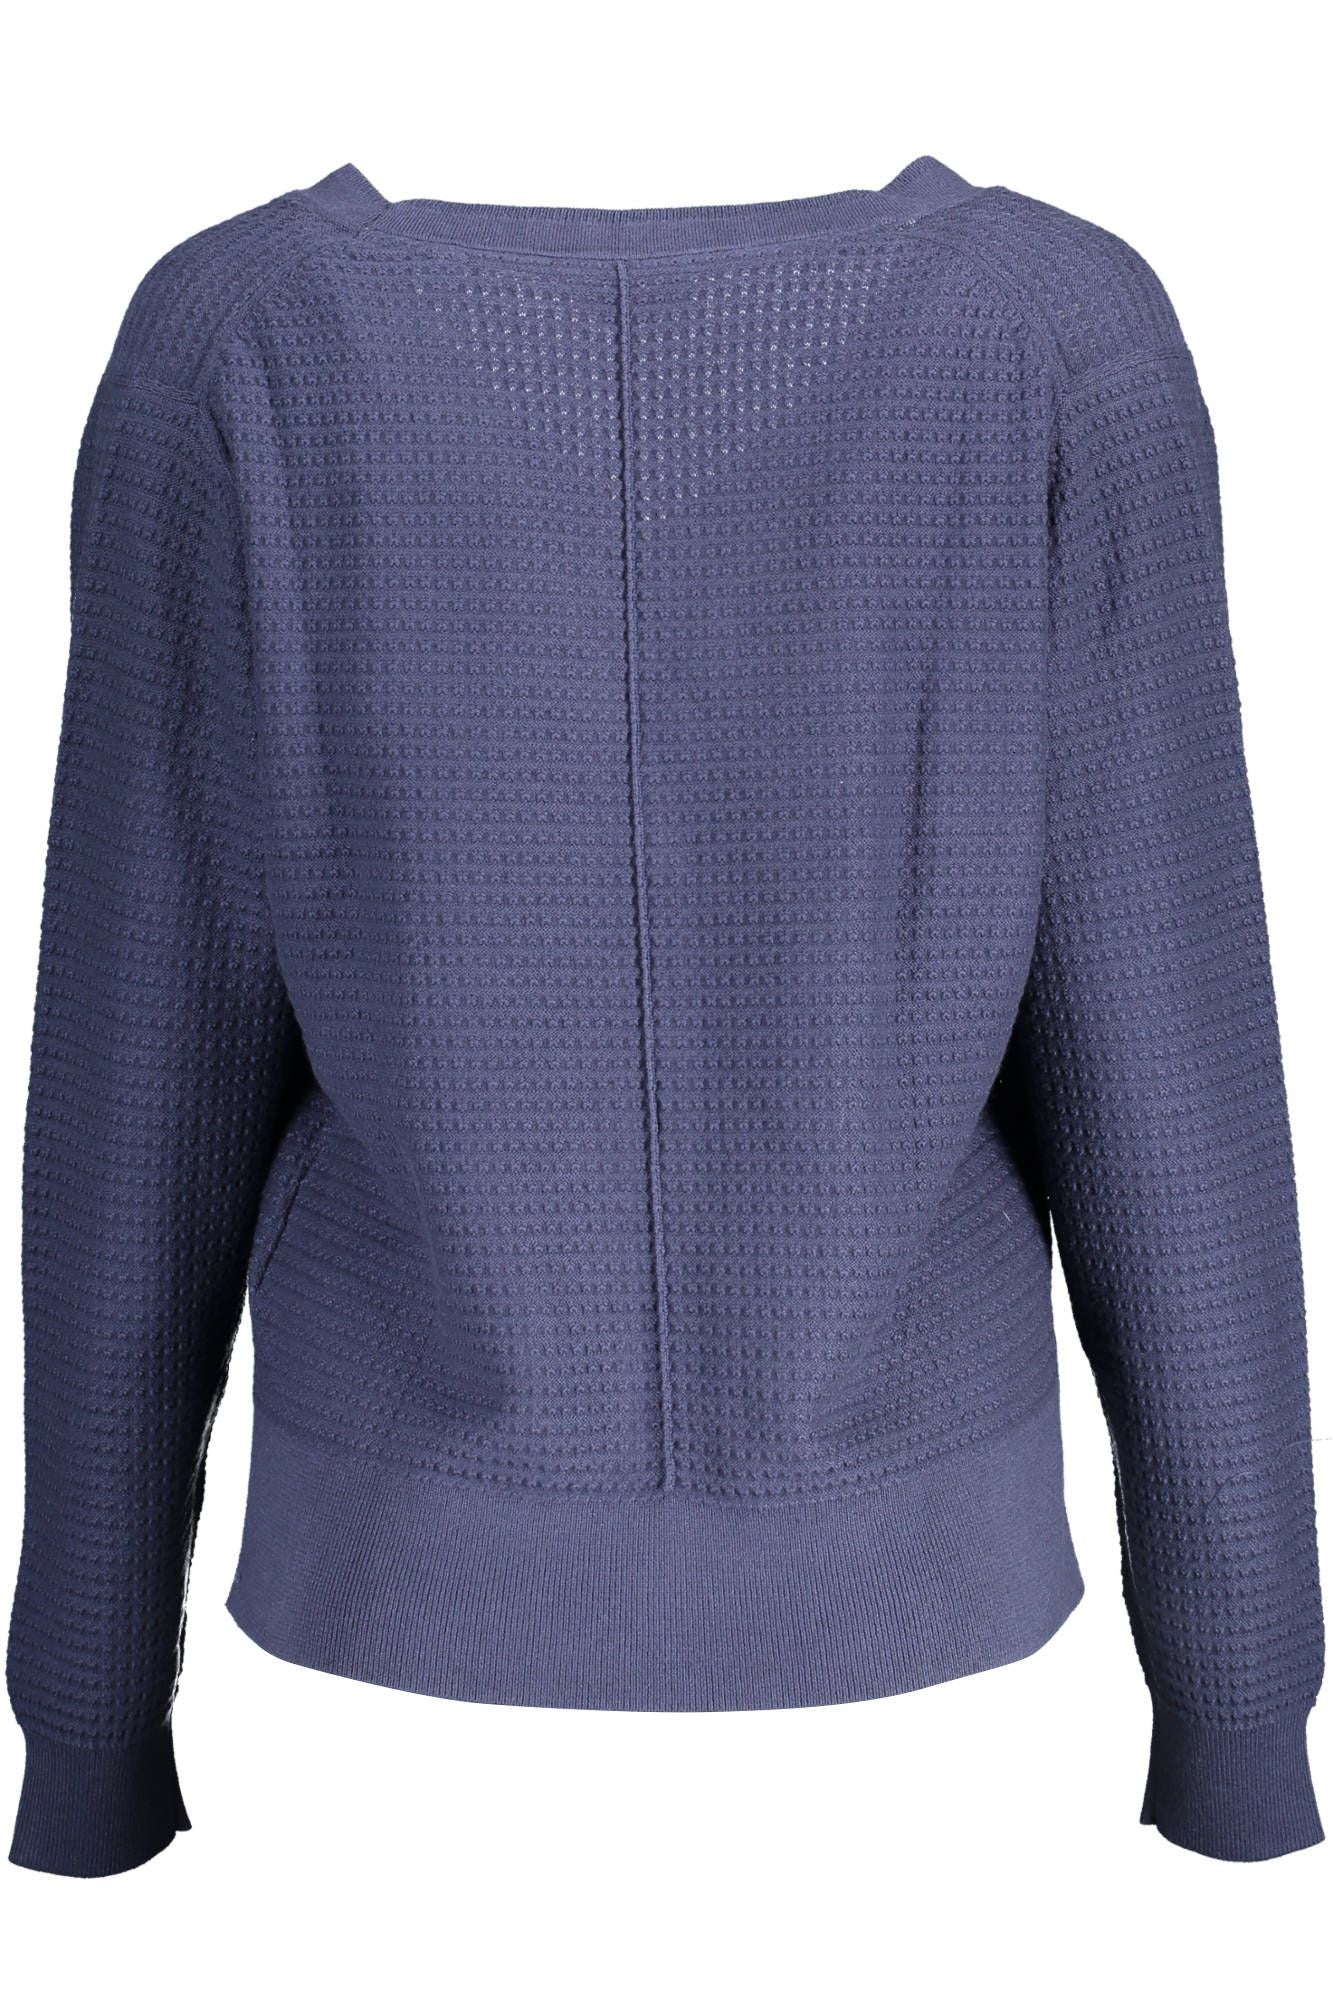 Gant Blue Cotton Sweater